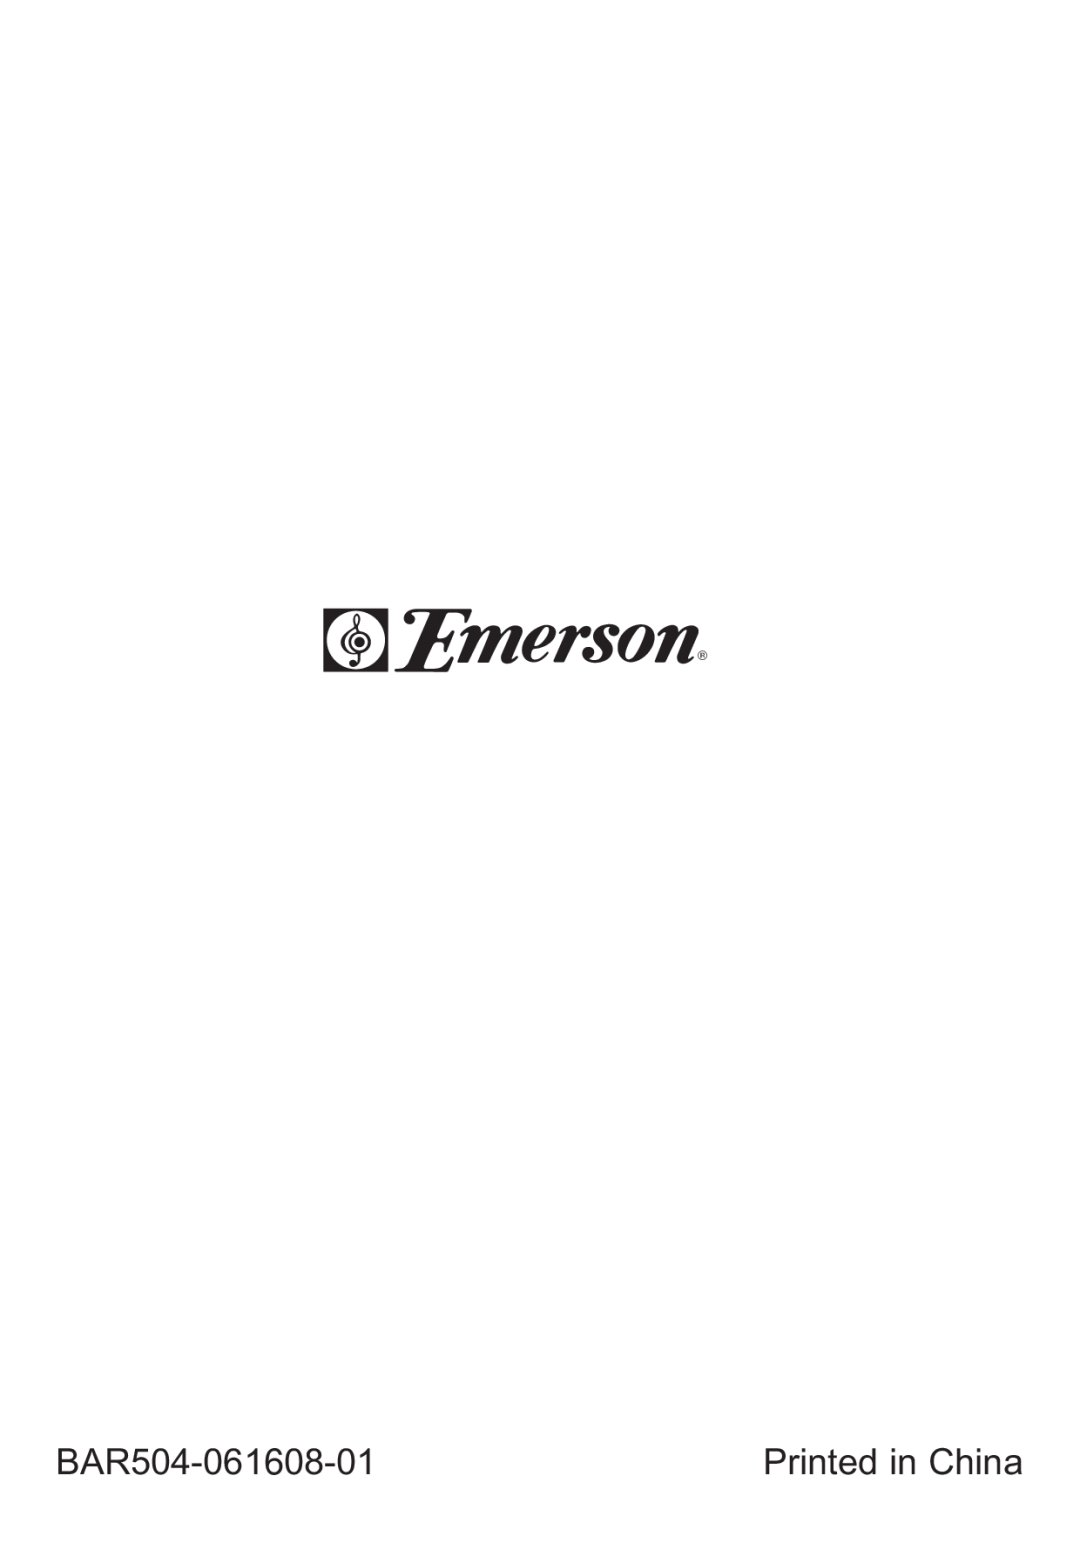 Emerson owner manual BAR504-061608-01 